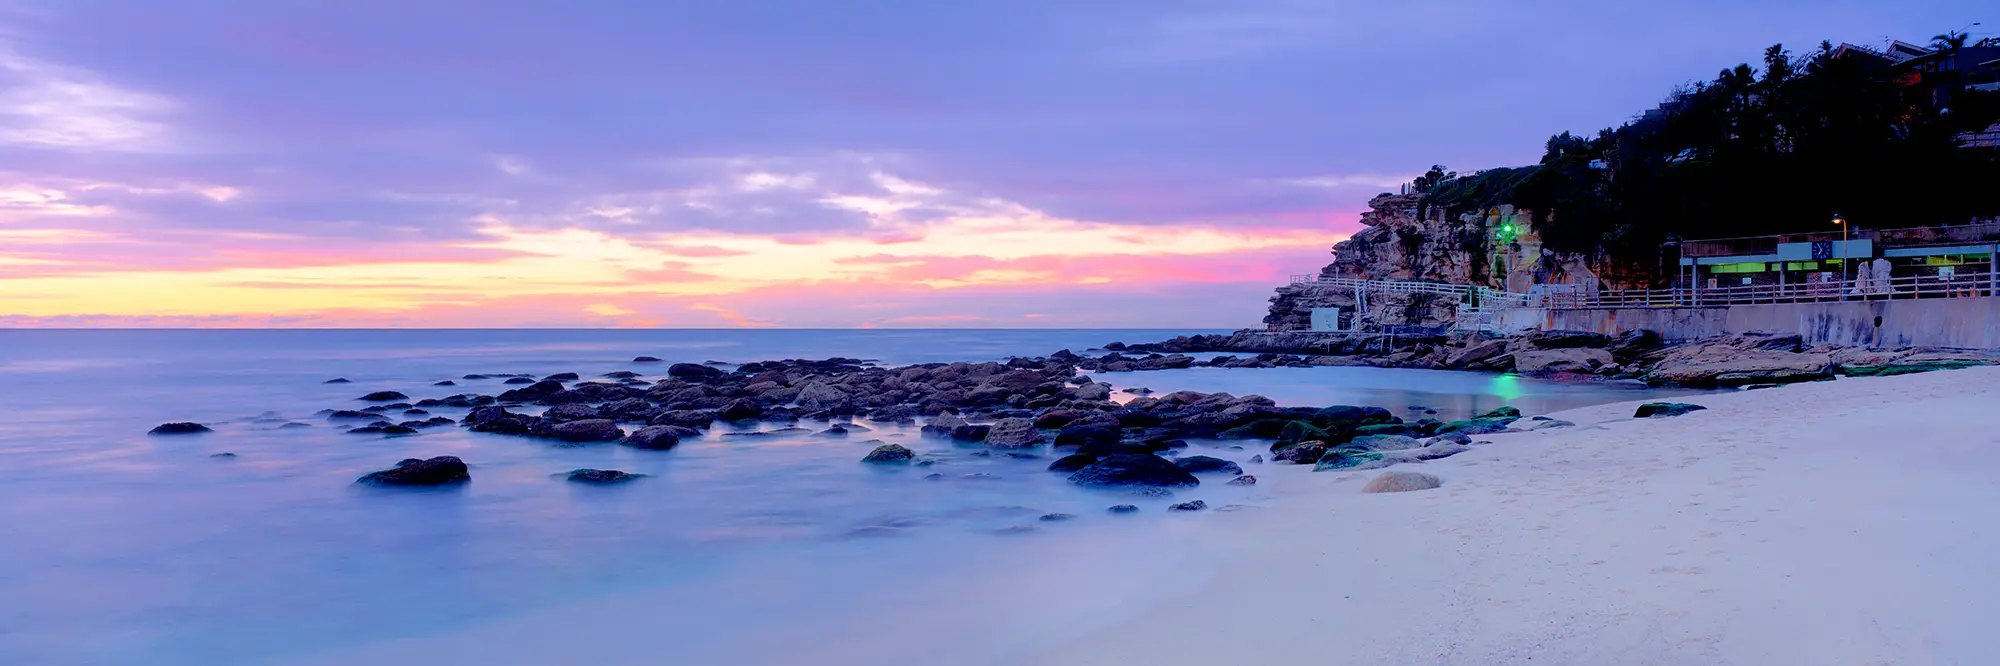 Bronte Ocean Baths Panoramic Landscape Moody SunrisePhoto